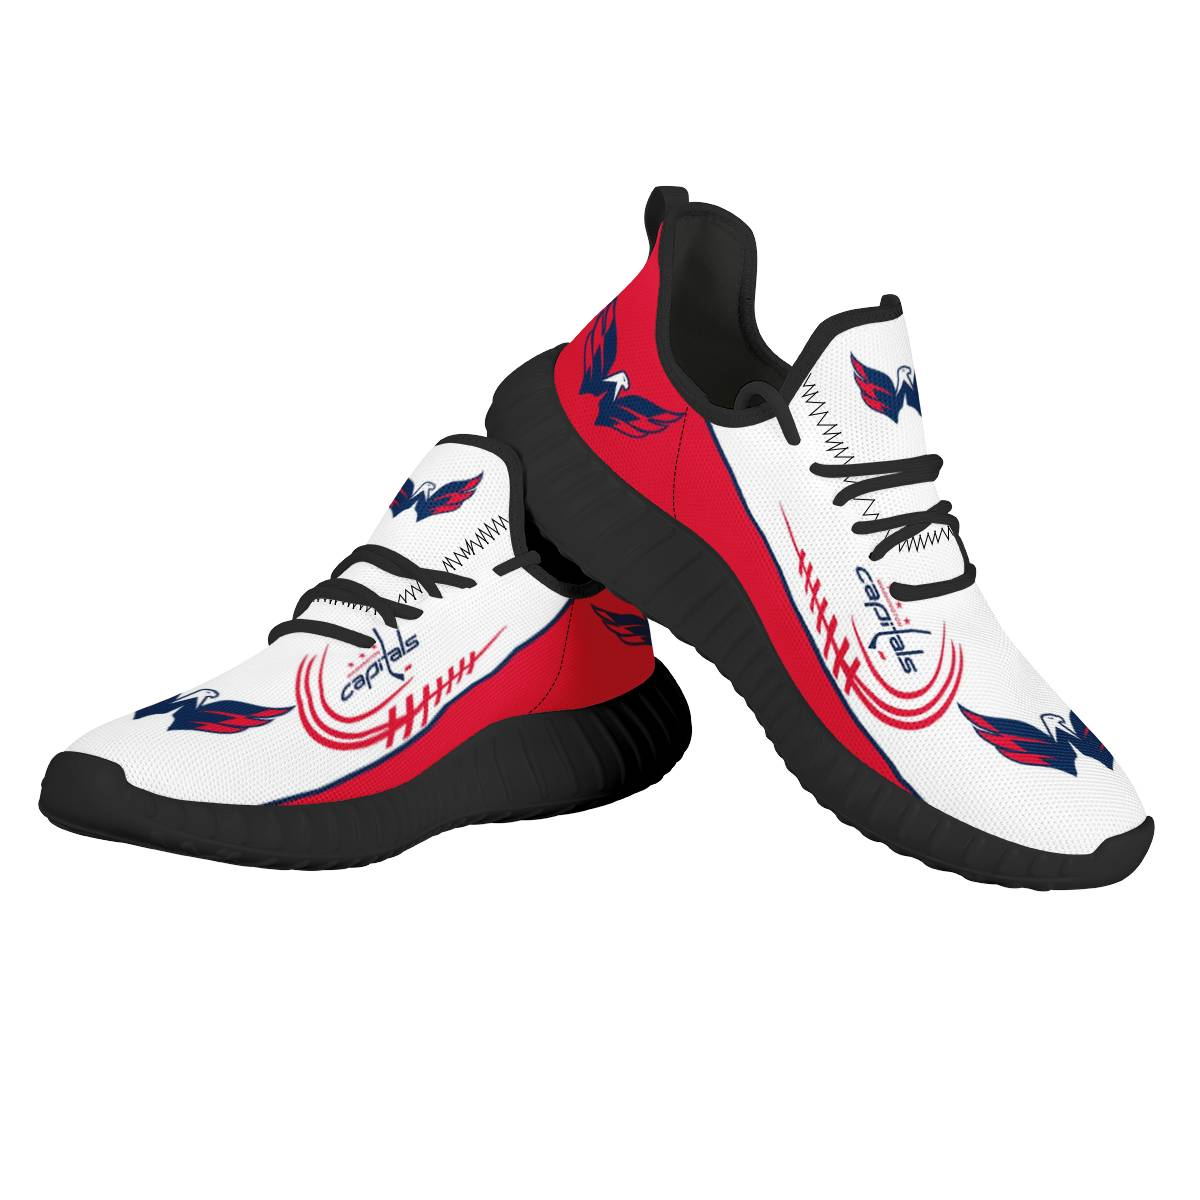 Women's NHL Washington Capitals Mesh Knit Sneakers/Shoes 001